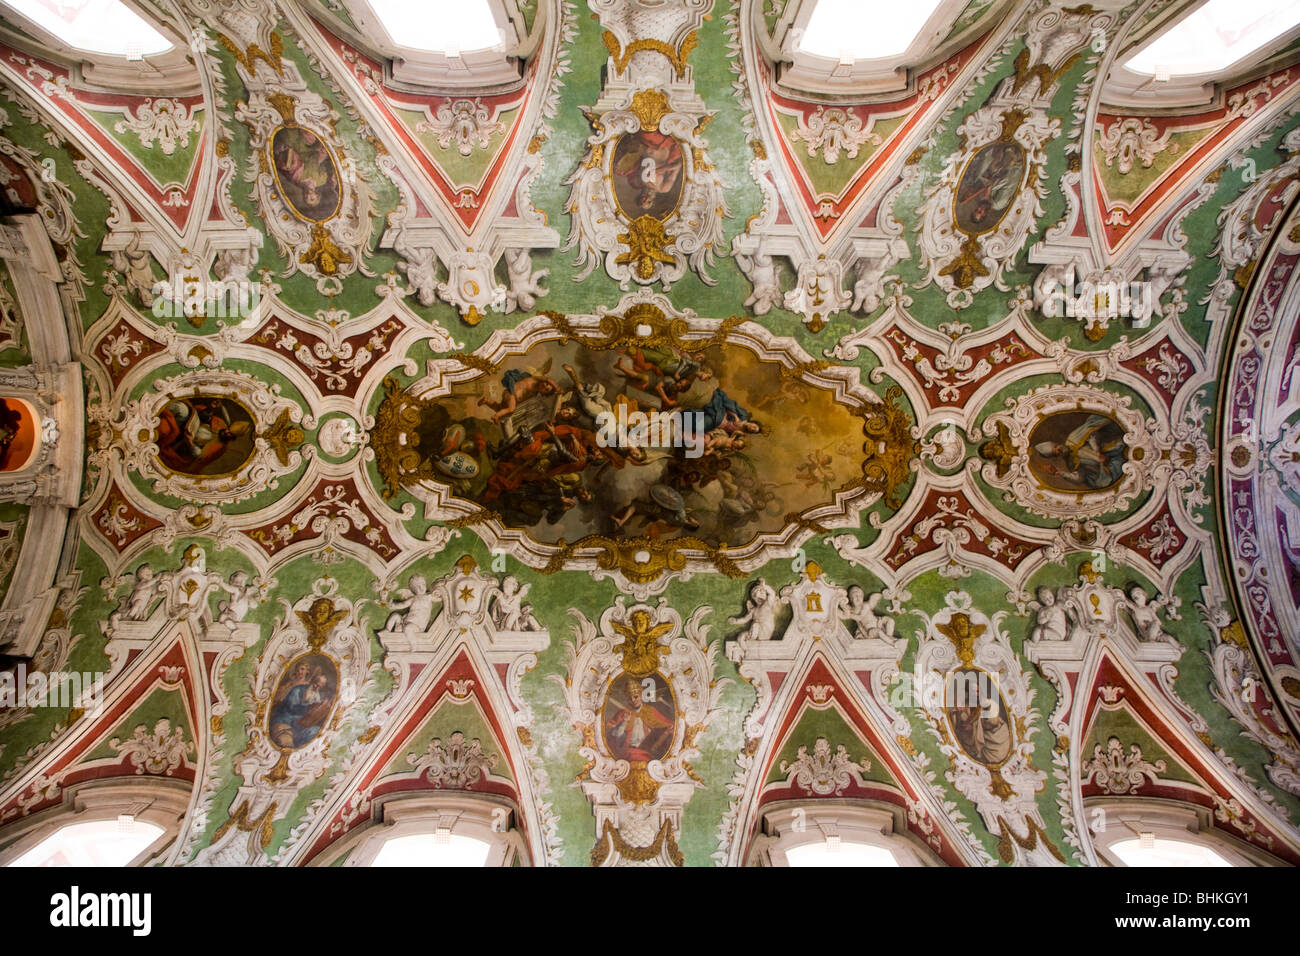 Portugal Lisbon Ceiling of Church Stock Photo